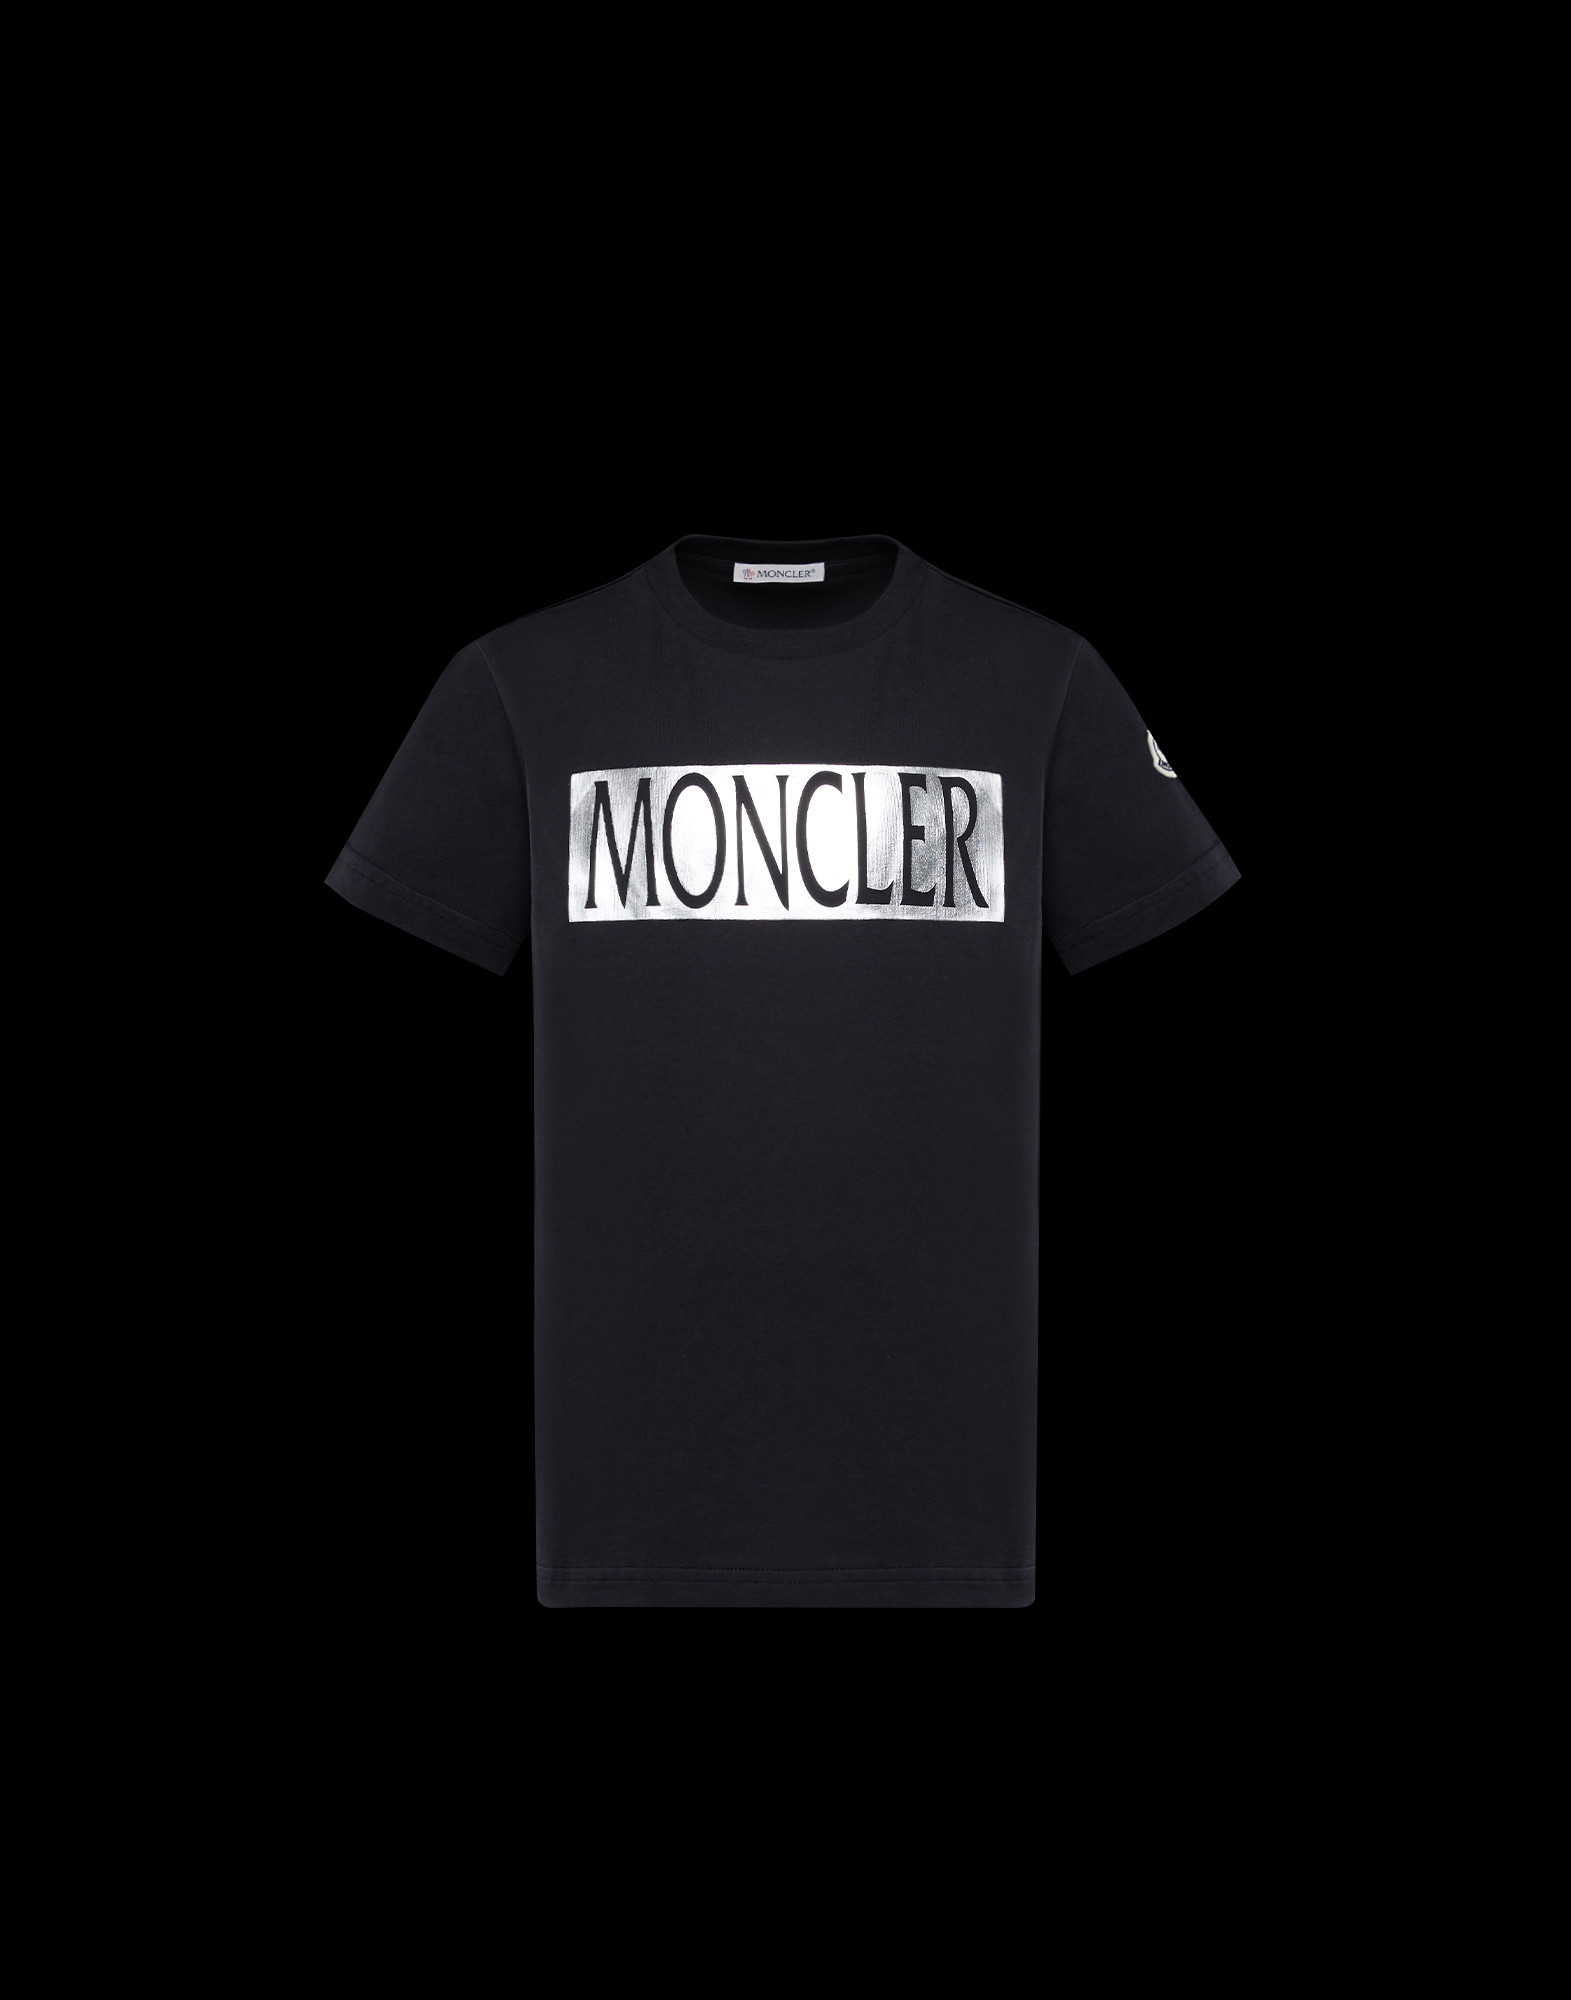 moncler tshirt black